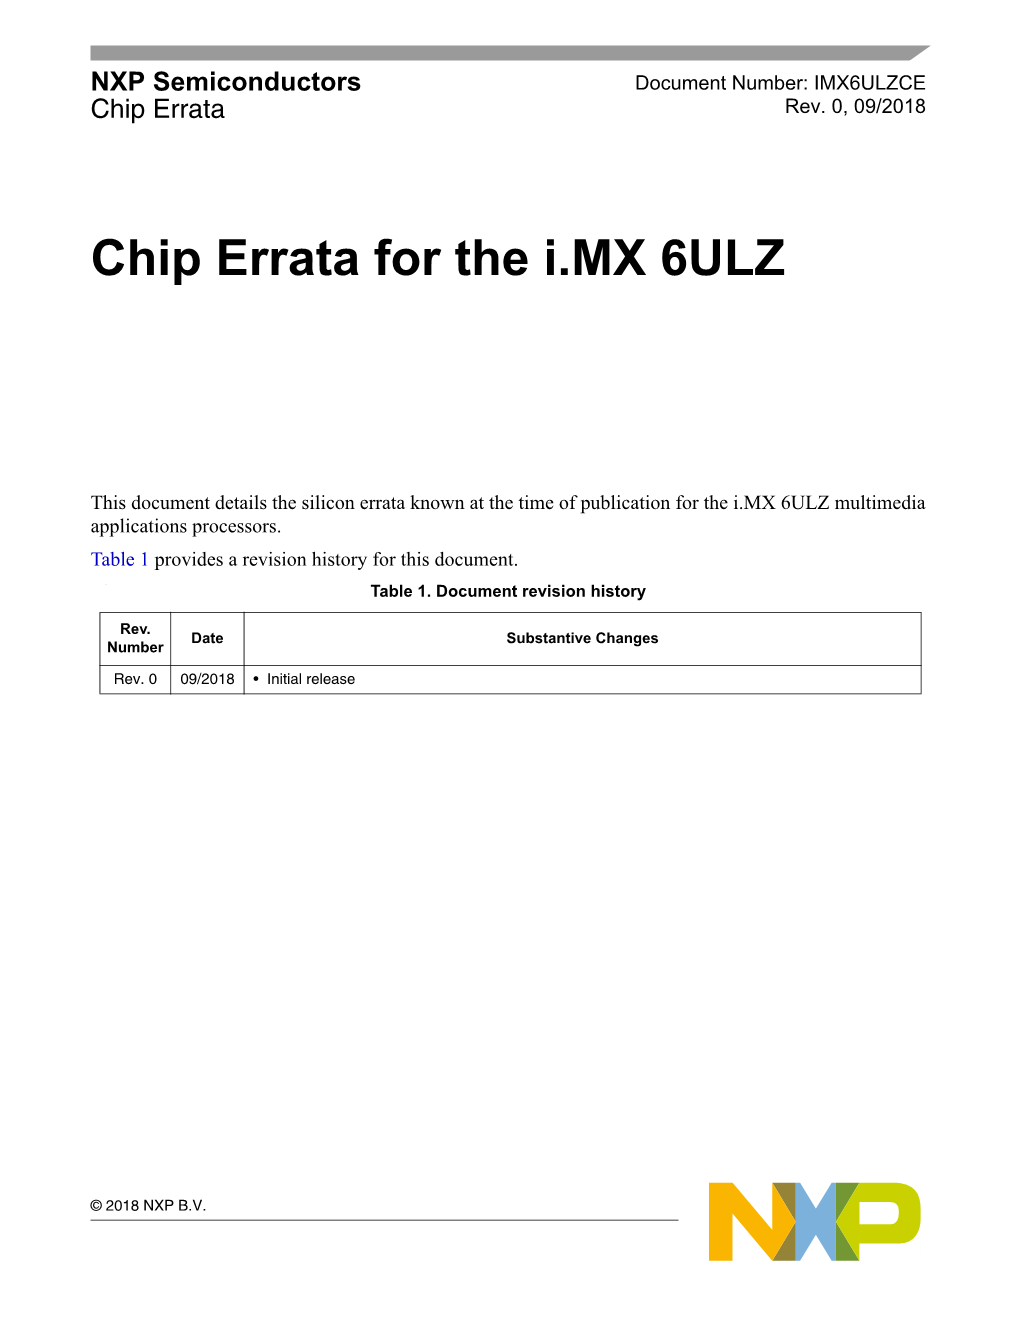 Chip Errata for the I.MX 6ULZ